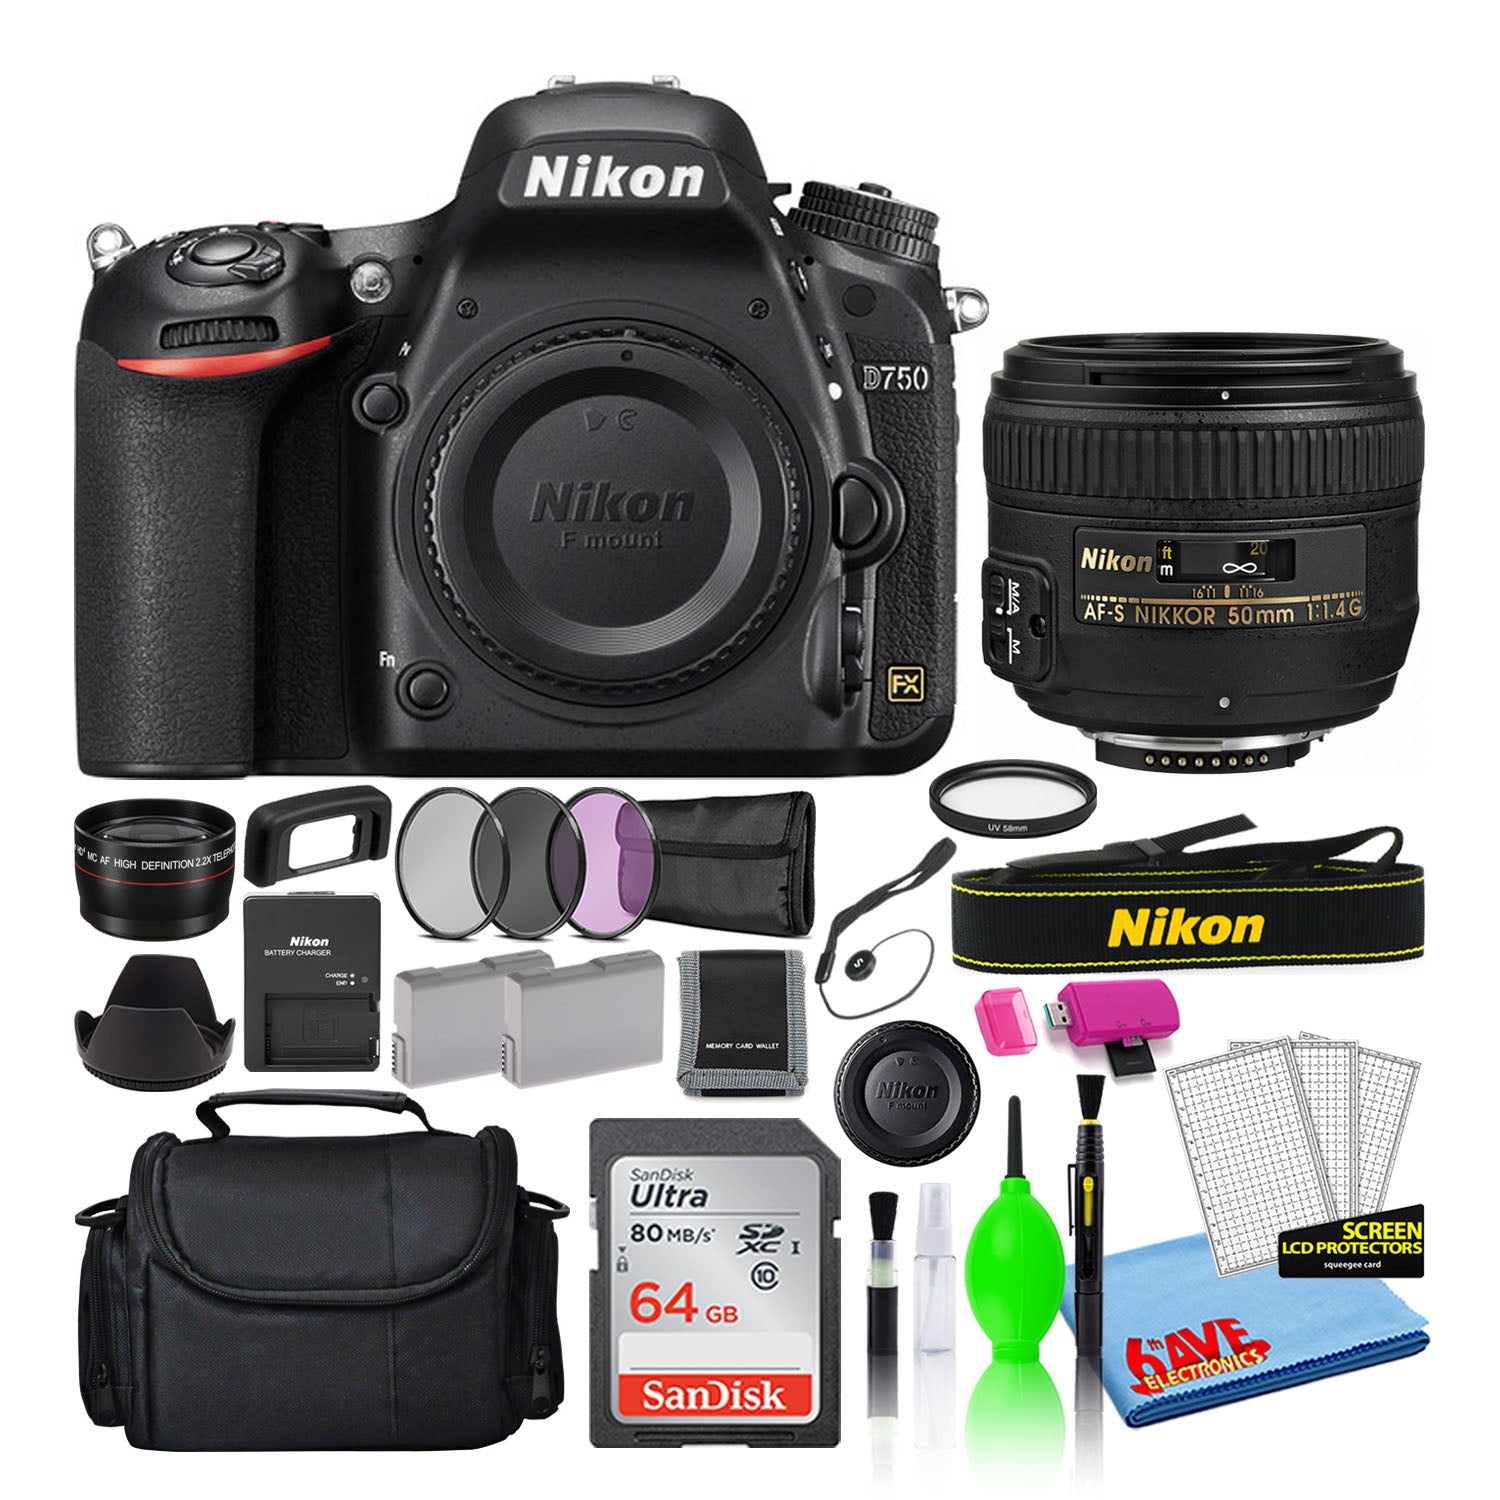 Nikon D750 Digital Camera with 50mm f/1.4G Lens (1543) + 64GB Card + Bag (Intl)